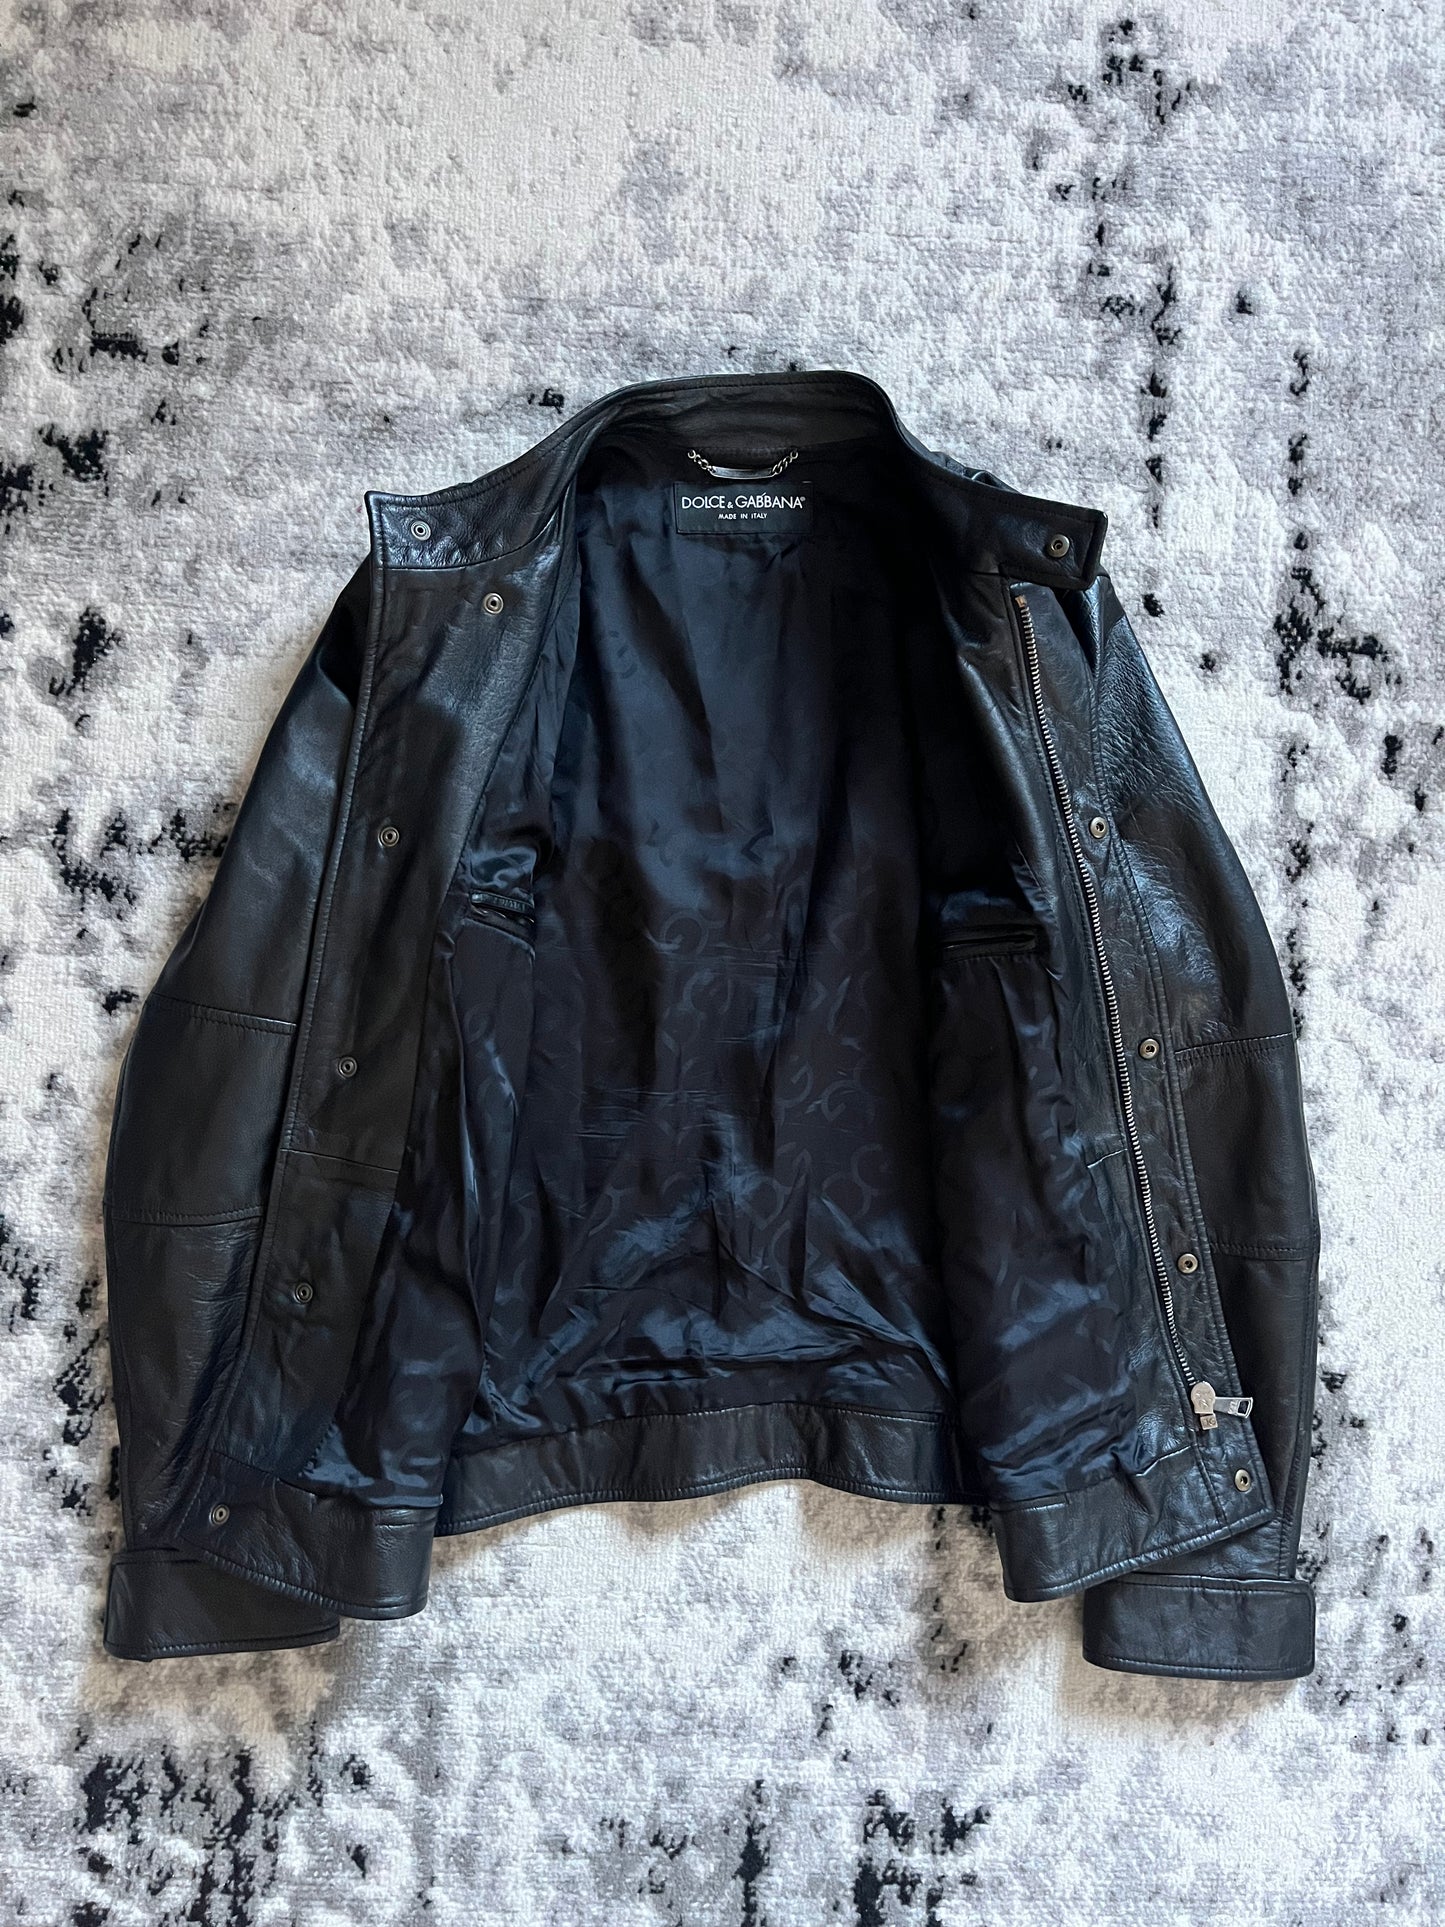 AW2010 Dolce & Gabbana Black Biker Leather Jacket (M/L)